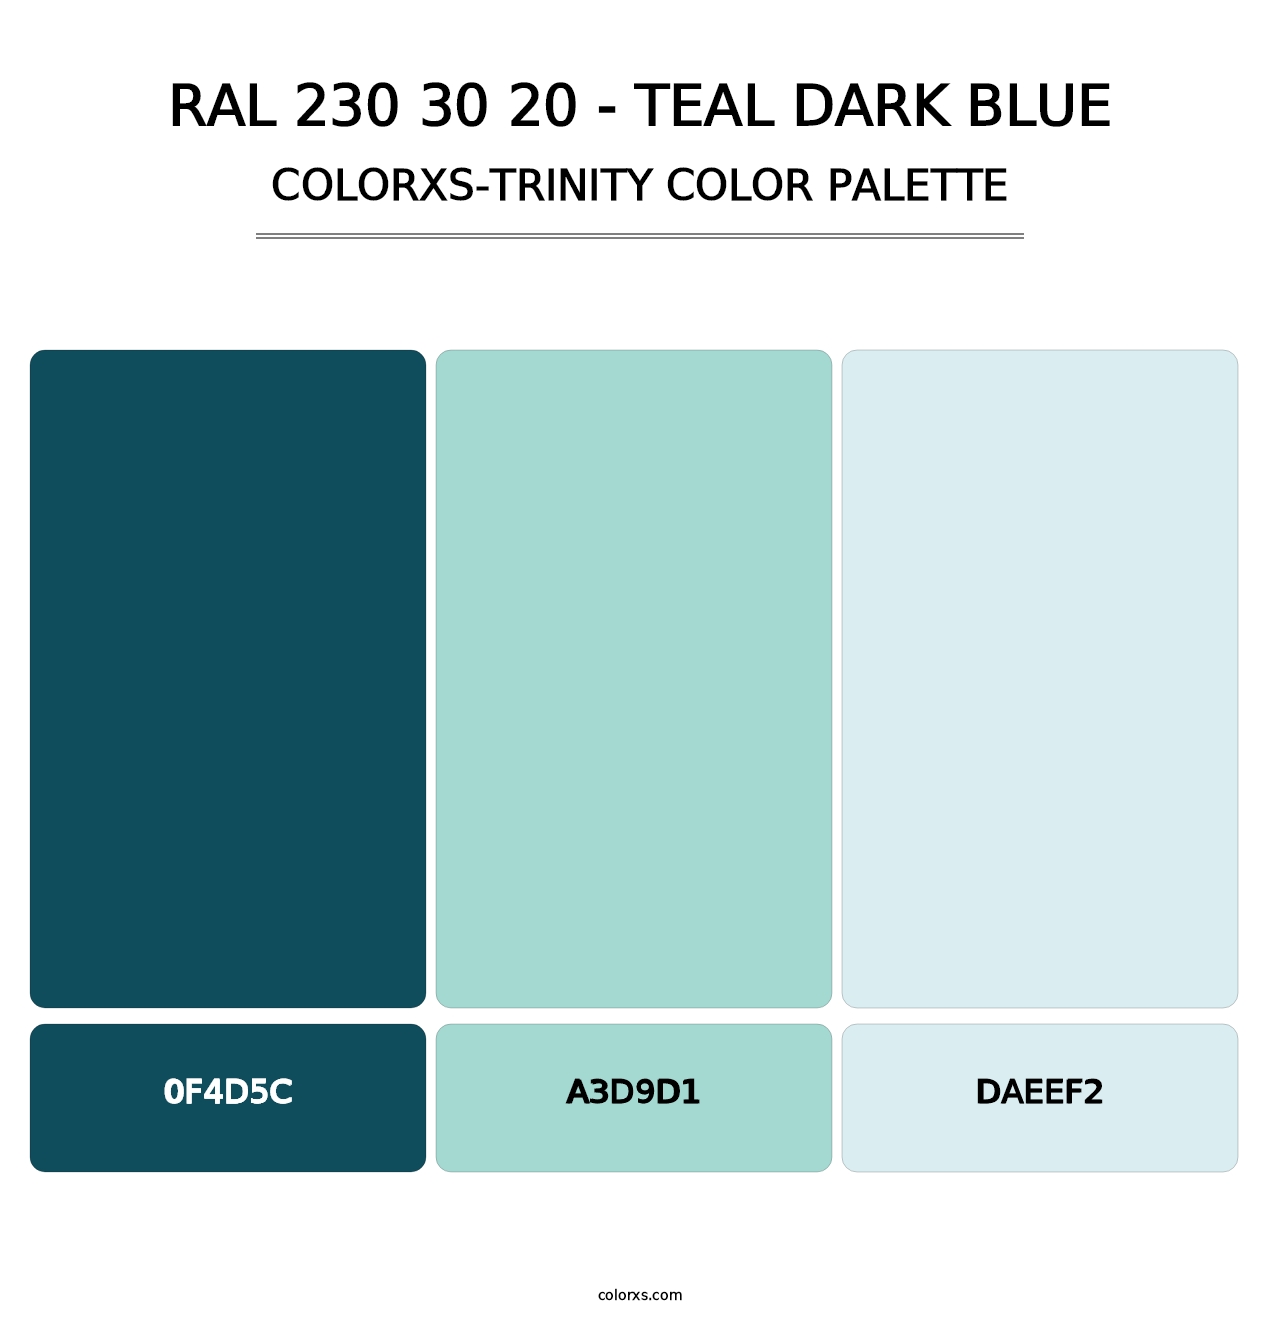 RAL 230 30 20 - Teal Dark Blue - Colorxs Trinity Palette